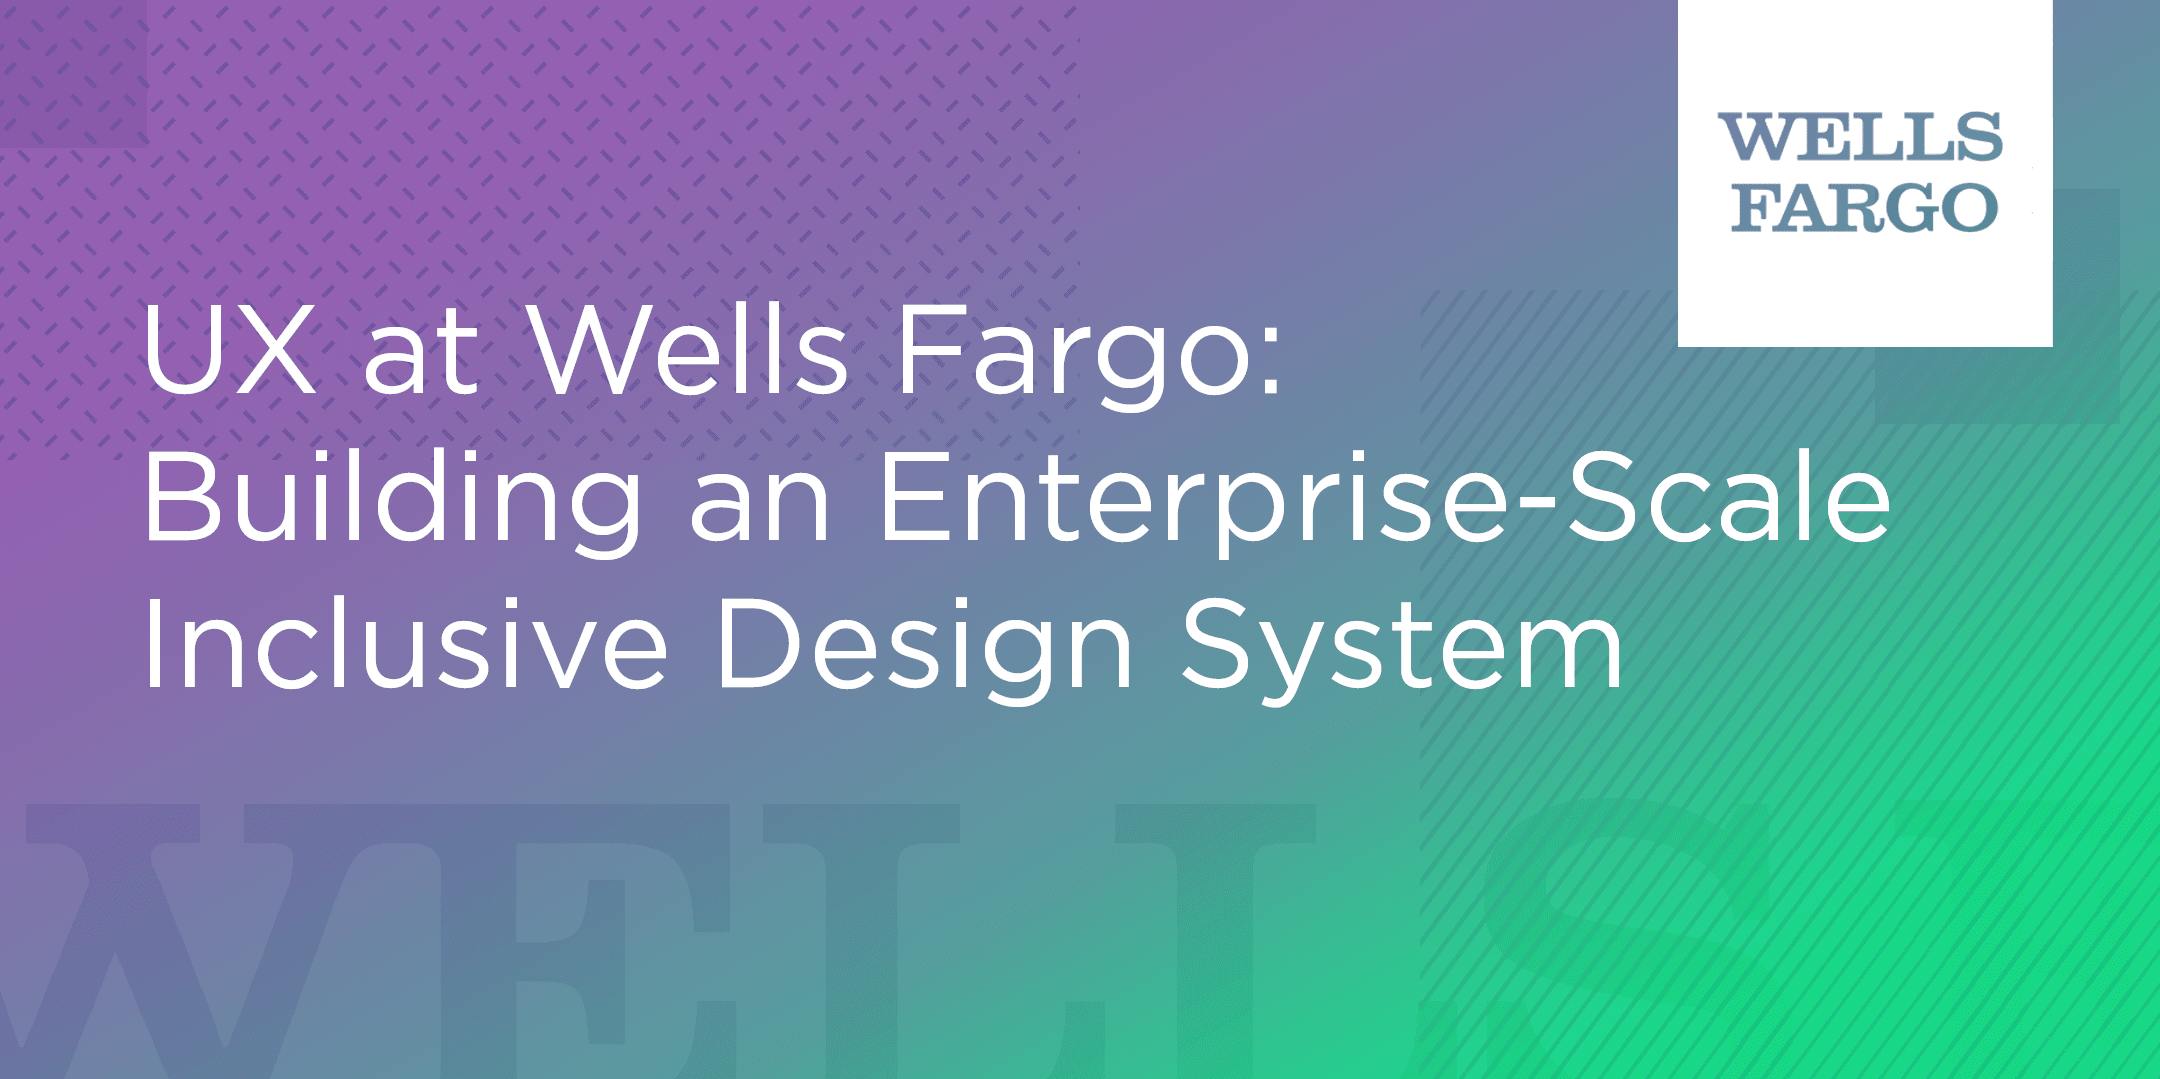 UX at Wells Fargo: Building an Enterprise-Scale Inclusive Design System